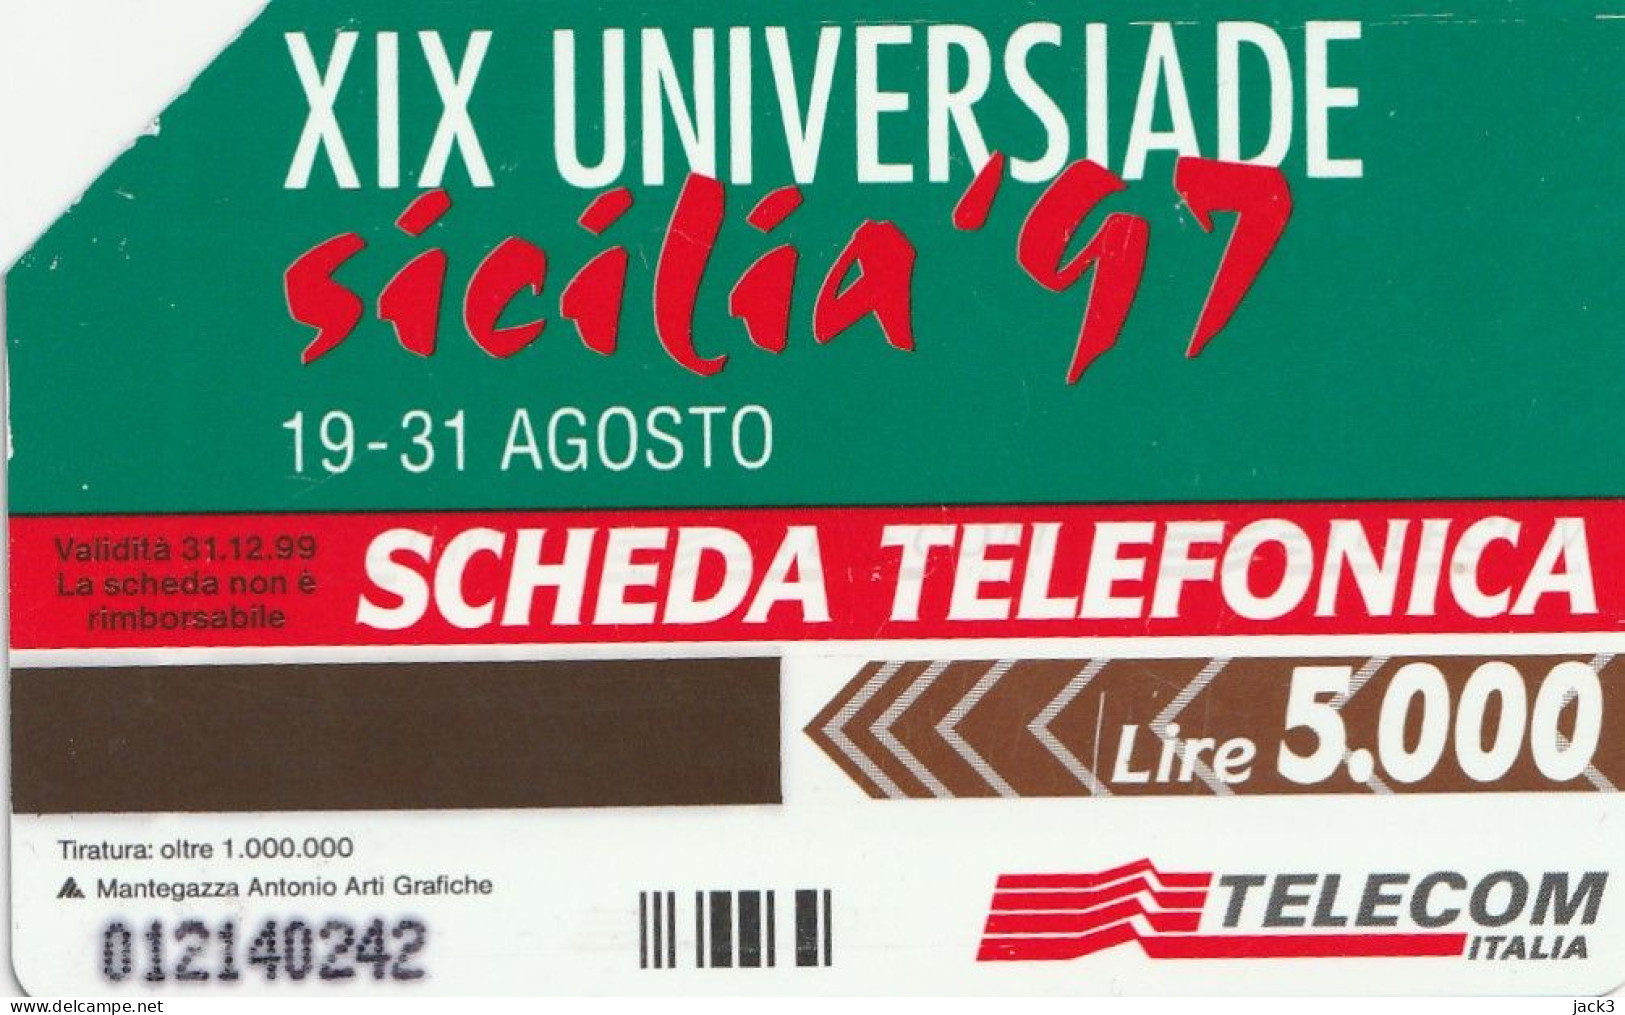 SCEDA TELEFONICA - XIX UNIVERSIADE - SICILIA '97 (2 SCANS) - Públicas Temáticas